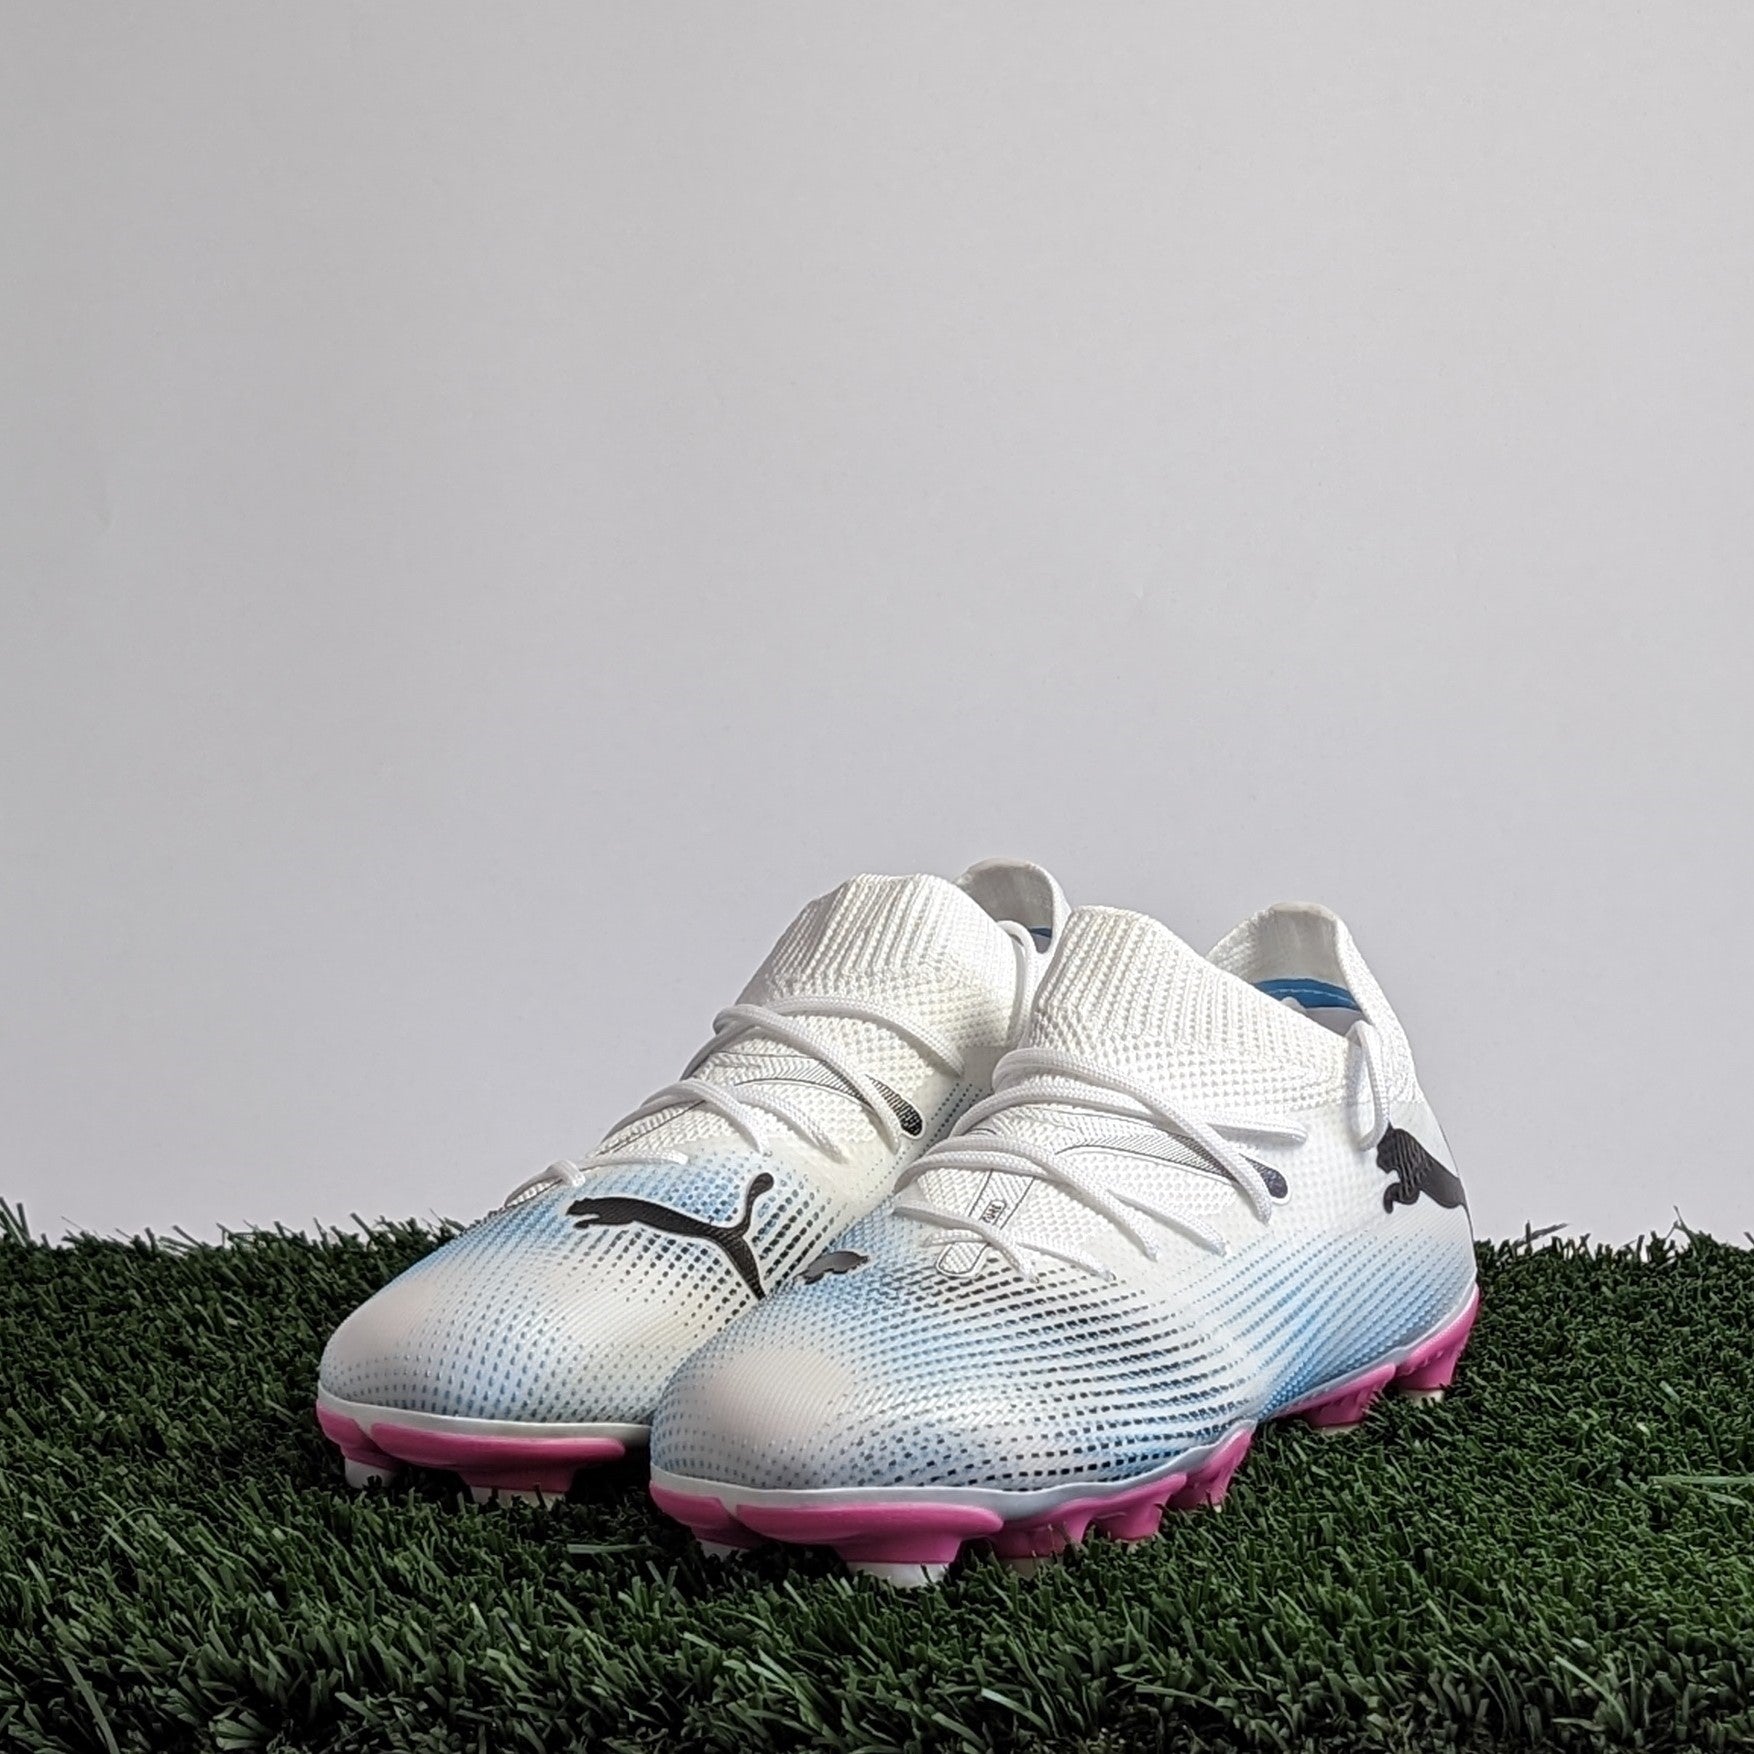 Kinetix Sergi Ag Men's Gear Cleats Football Shoes